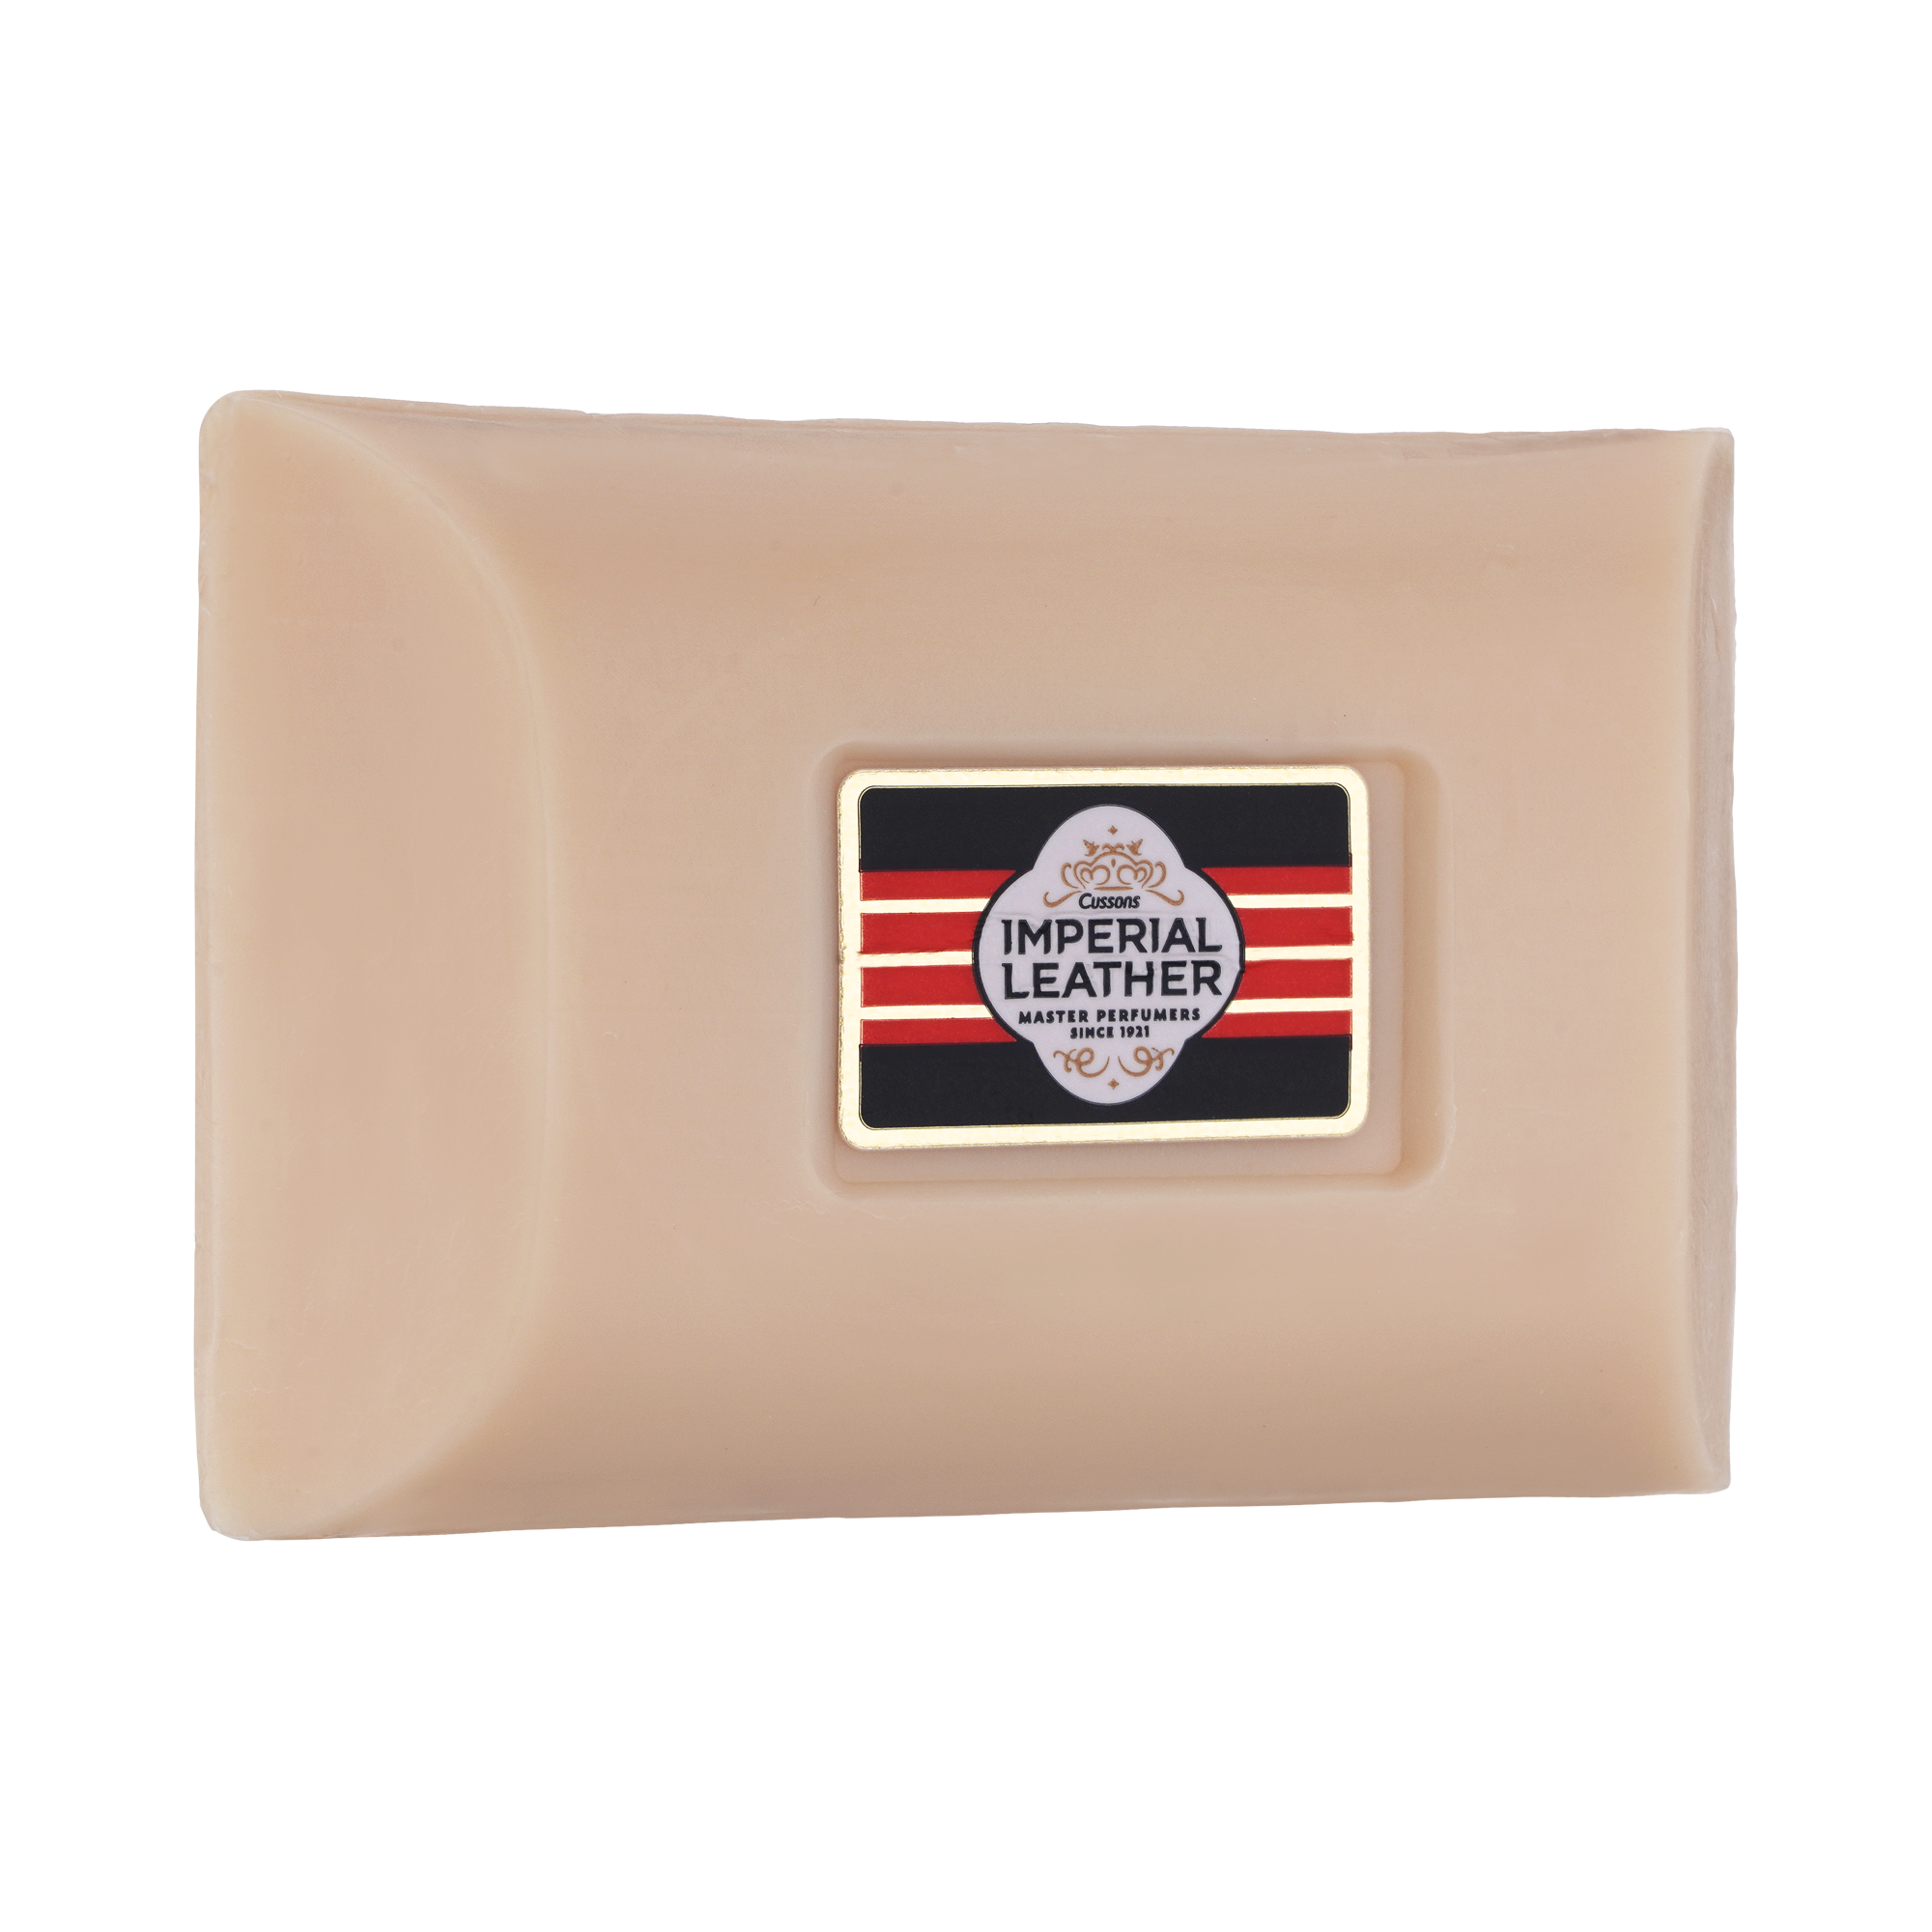 Imperial Leather Original Soap 